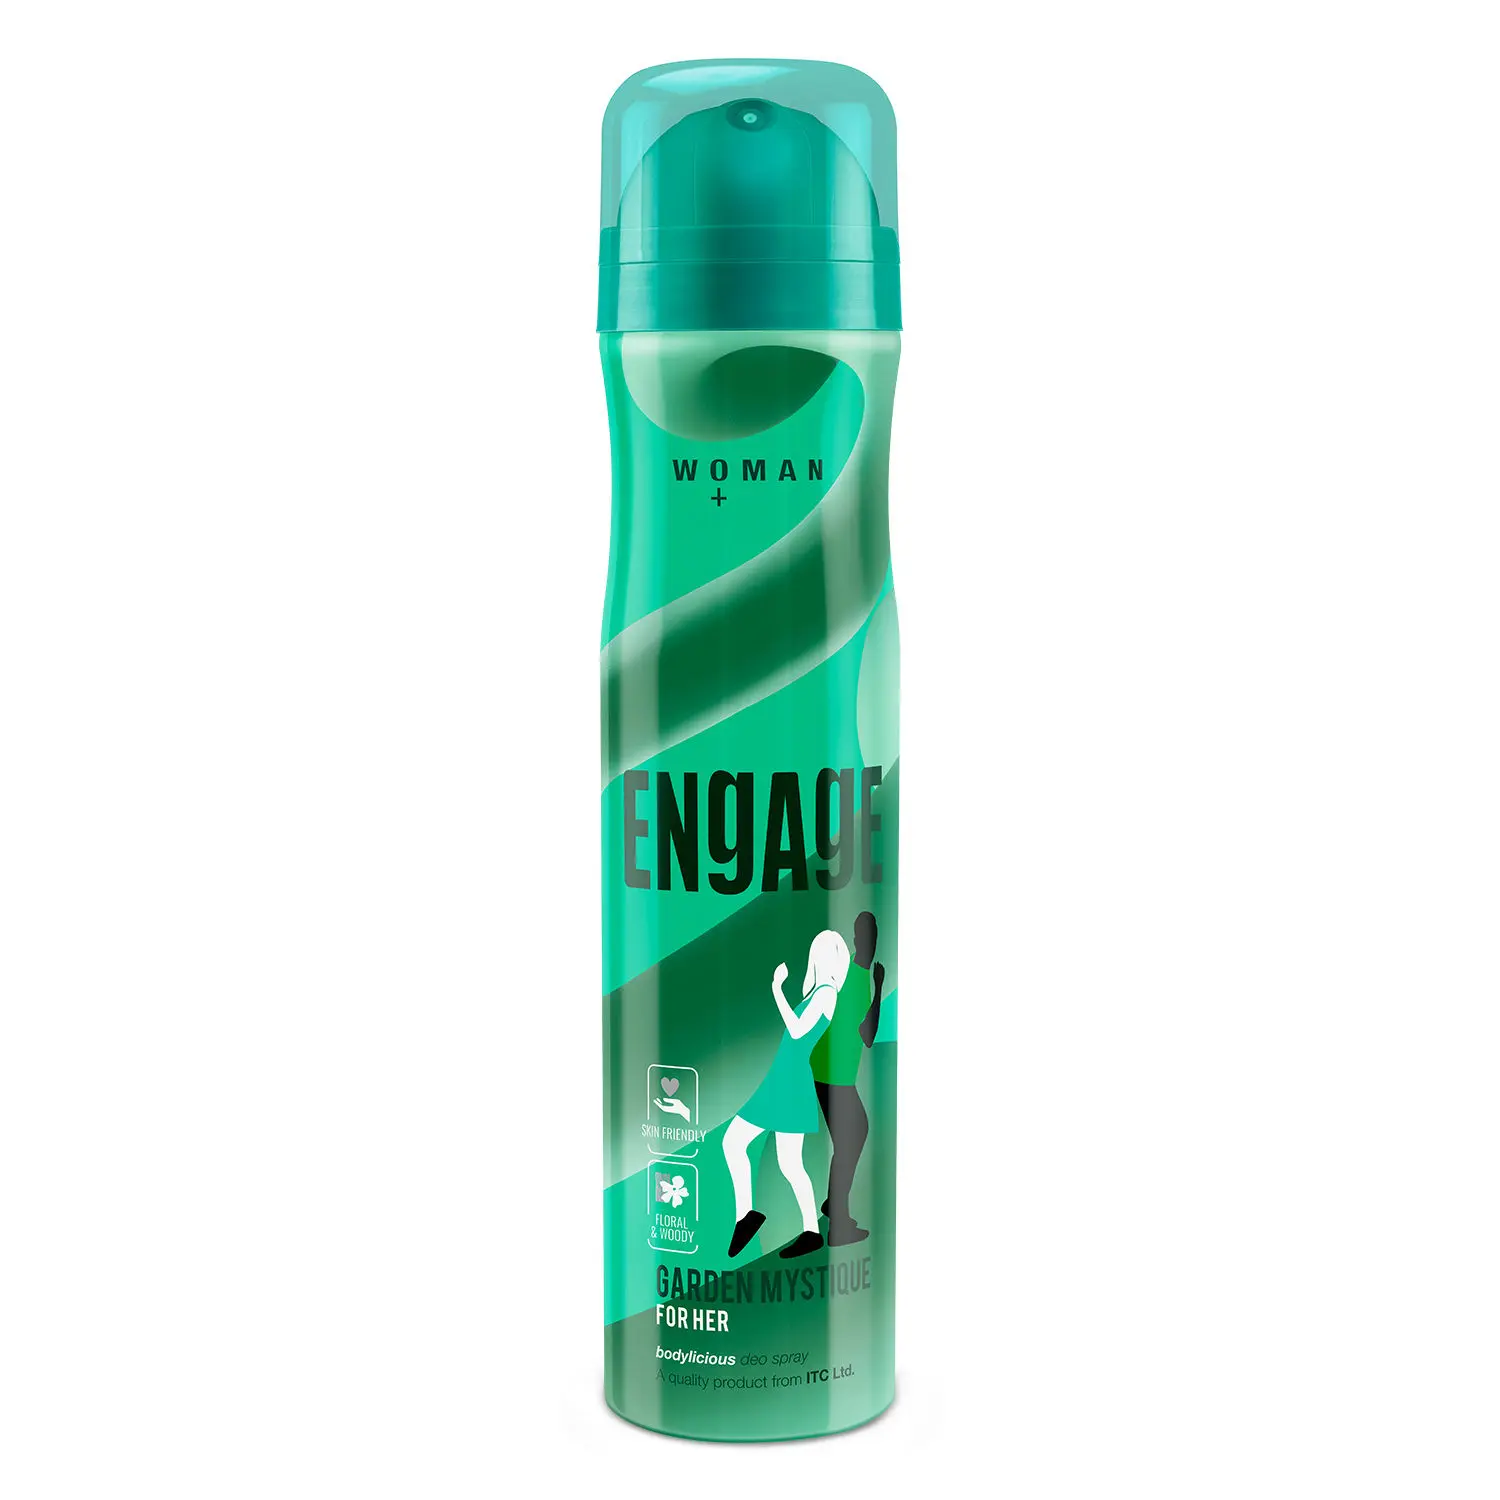 Engage Garden Mystique Deodorant for Women, FLORAL & WOODY, Skin Friendly, 150ml